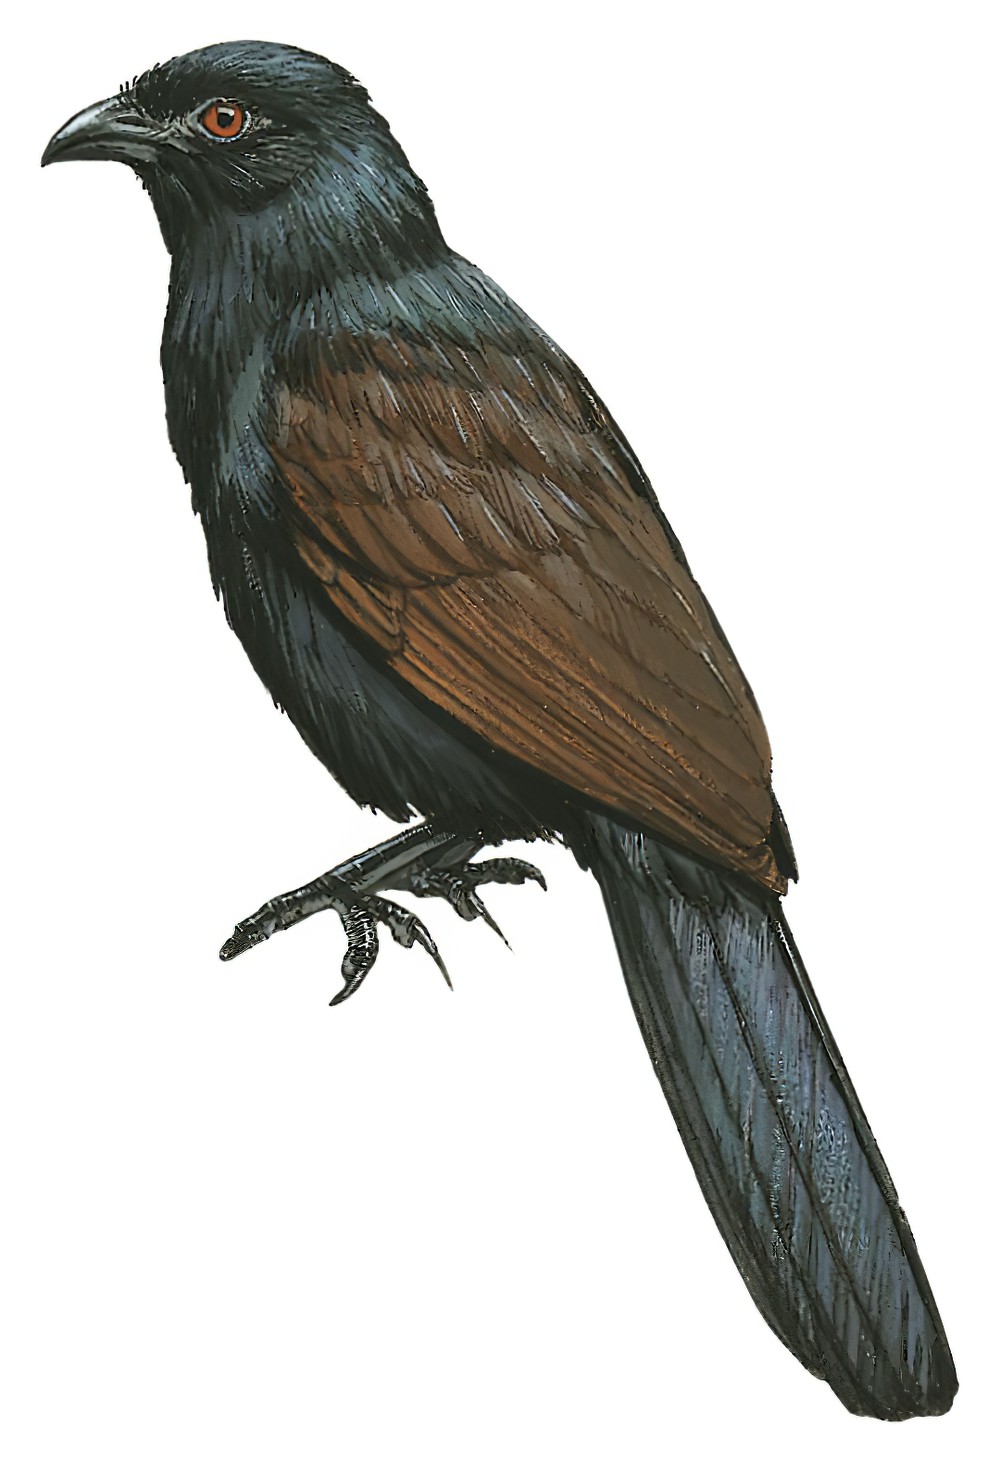 Philippine Coucal / Centropus viridis